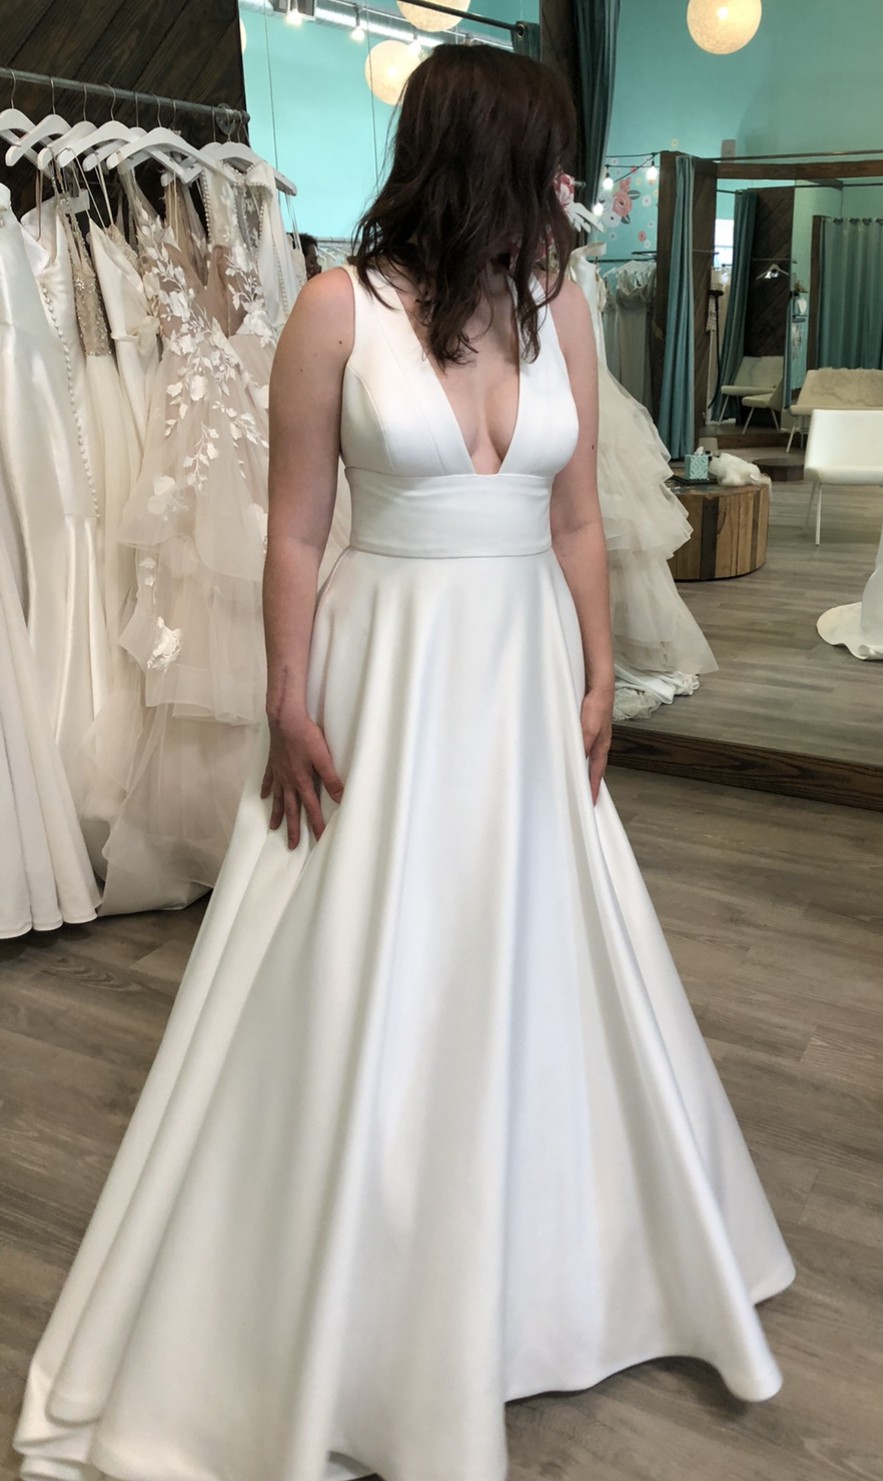 Kate McDonald Riley Sample Wedding Dress Save 40% - Stillwhite